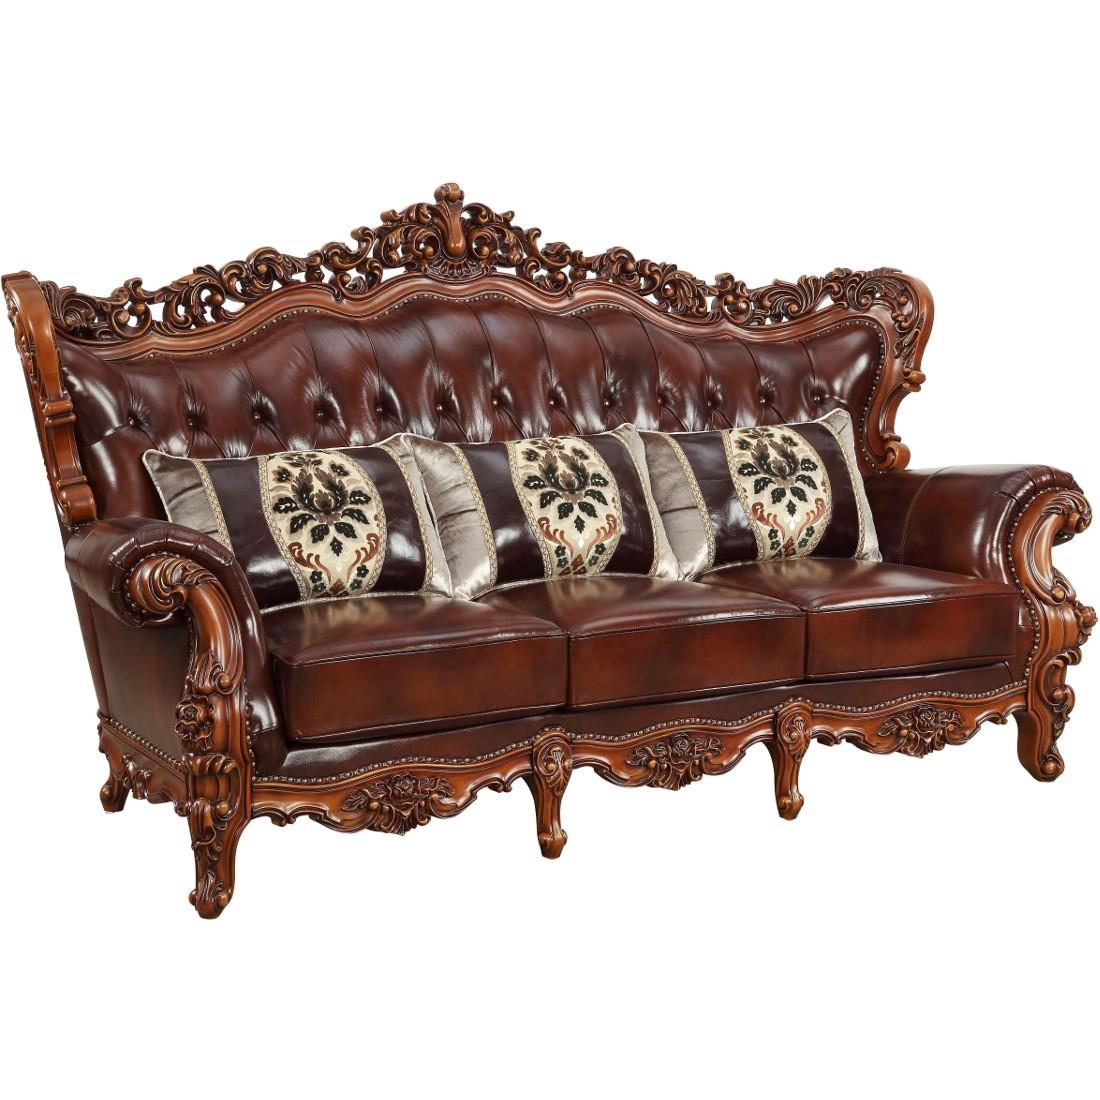 Classic, Traditional Sofa Eustoma-53065 Eustoma-53065 in Cherry, Walnut Top grain leather